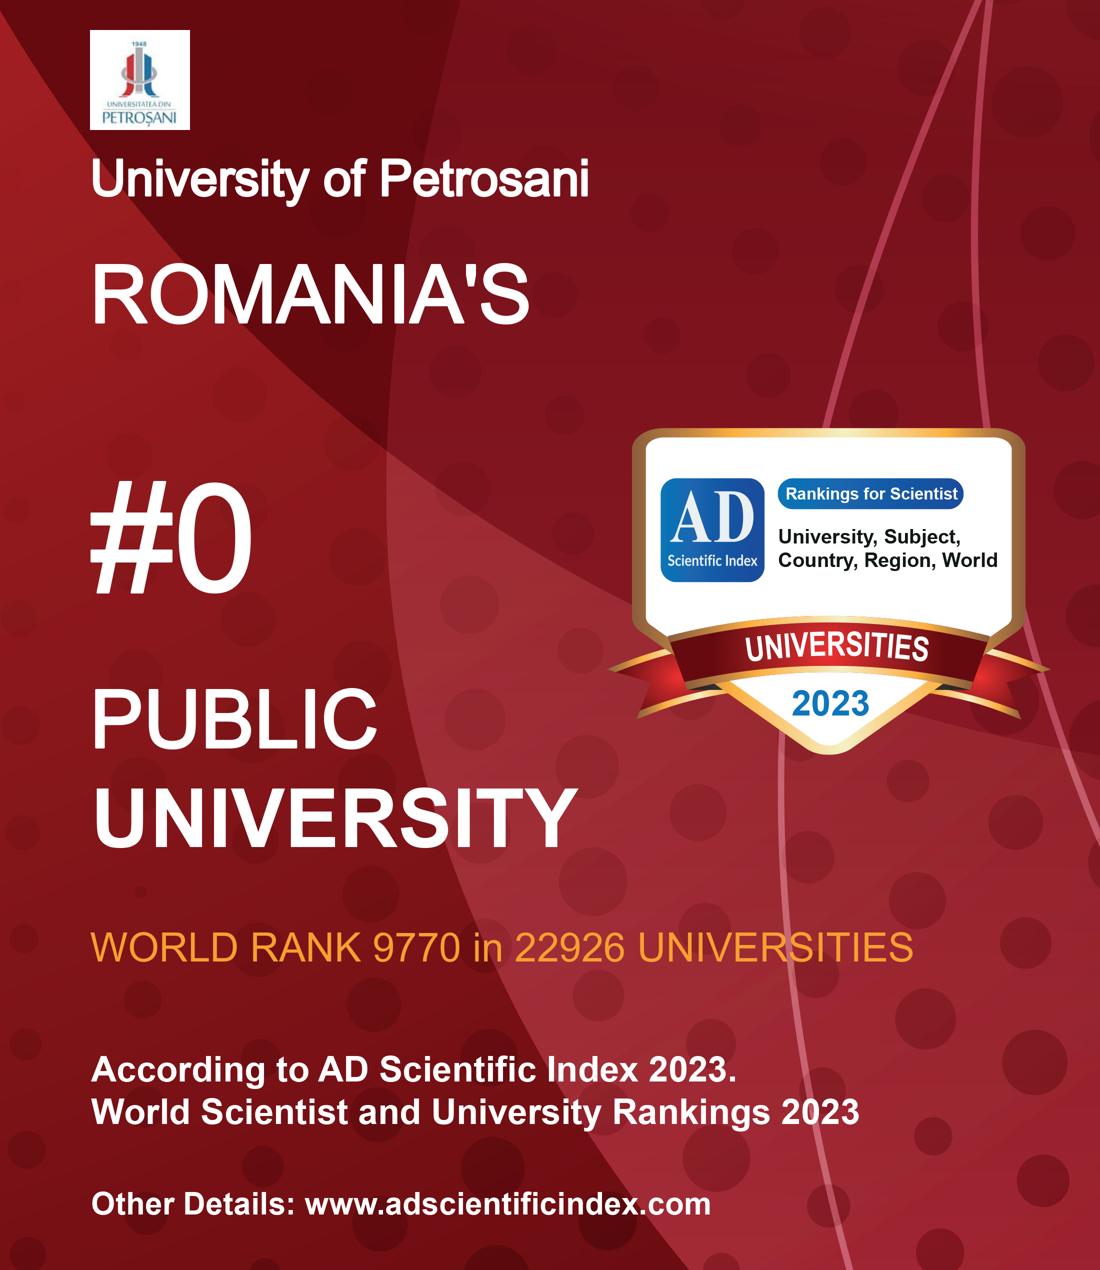 University of Petrosani